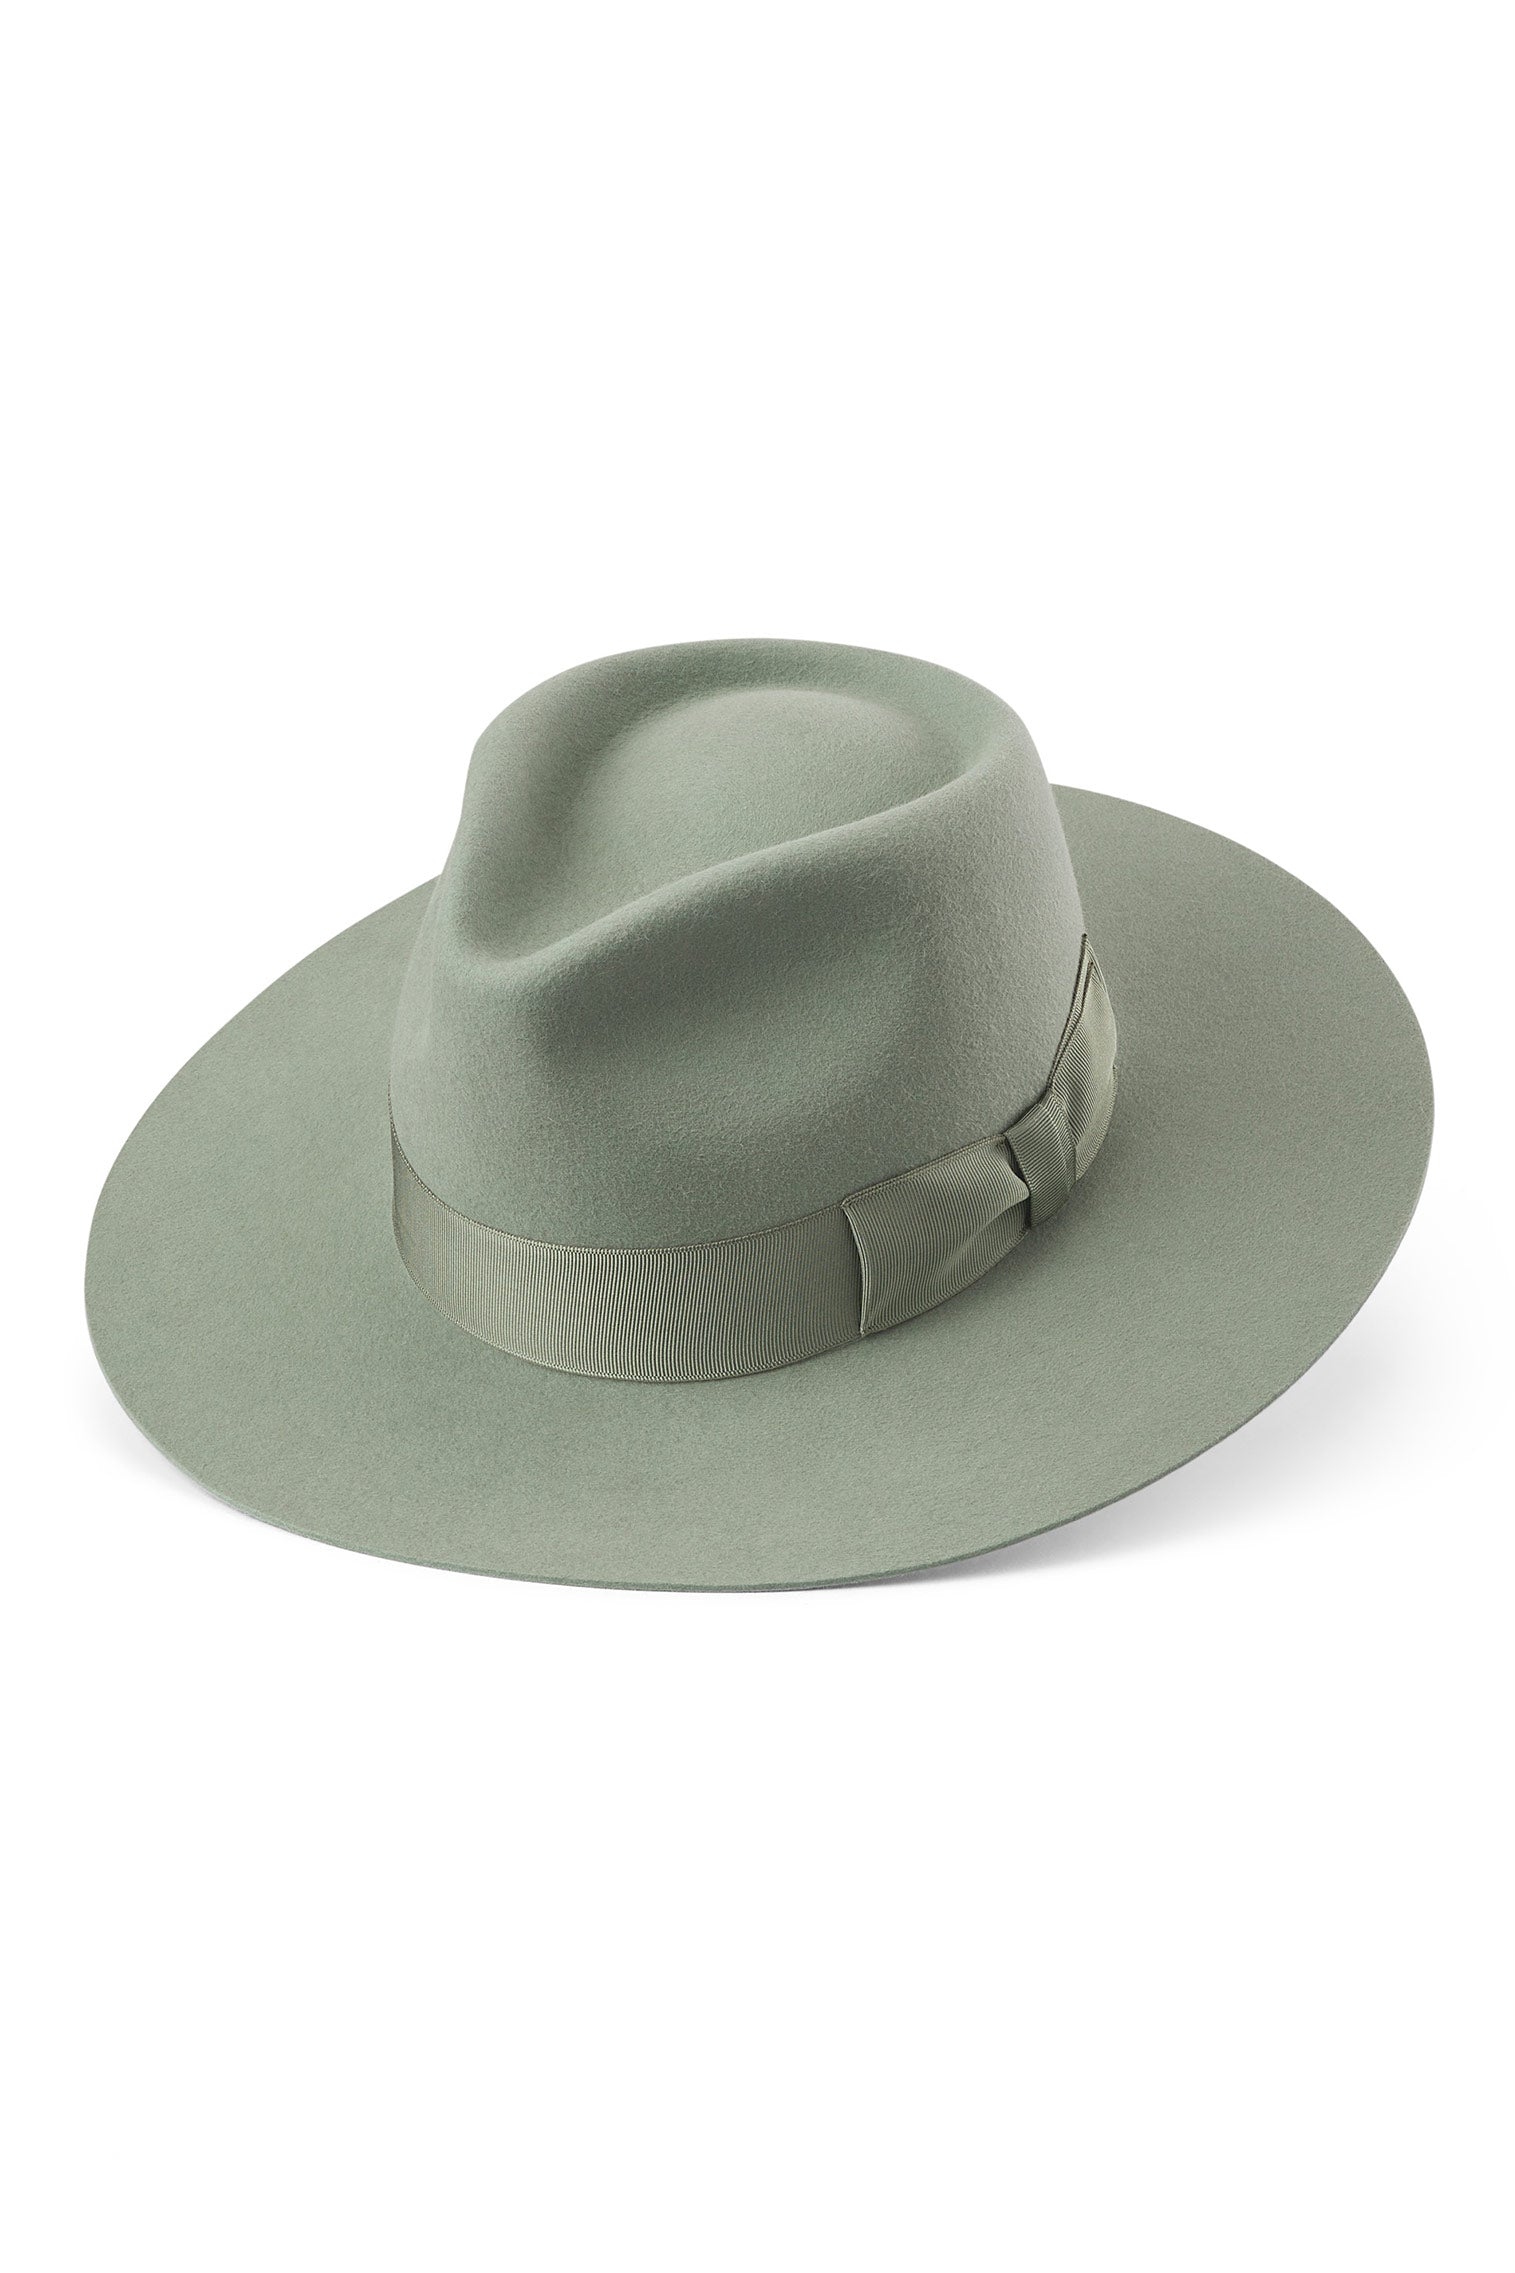 Toni Green Flat-Brim Fedora - New Season Women's Hats - Lock & Co. Hatters London UK